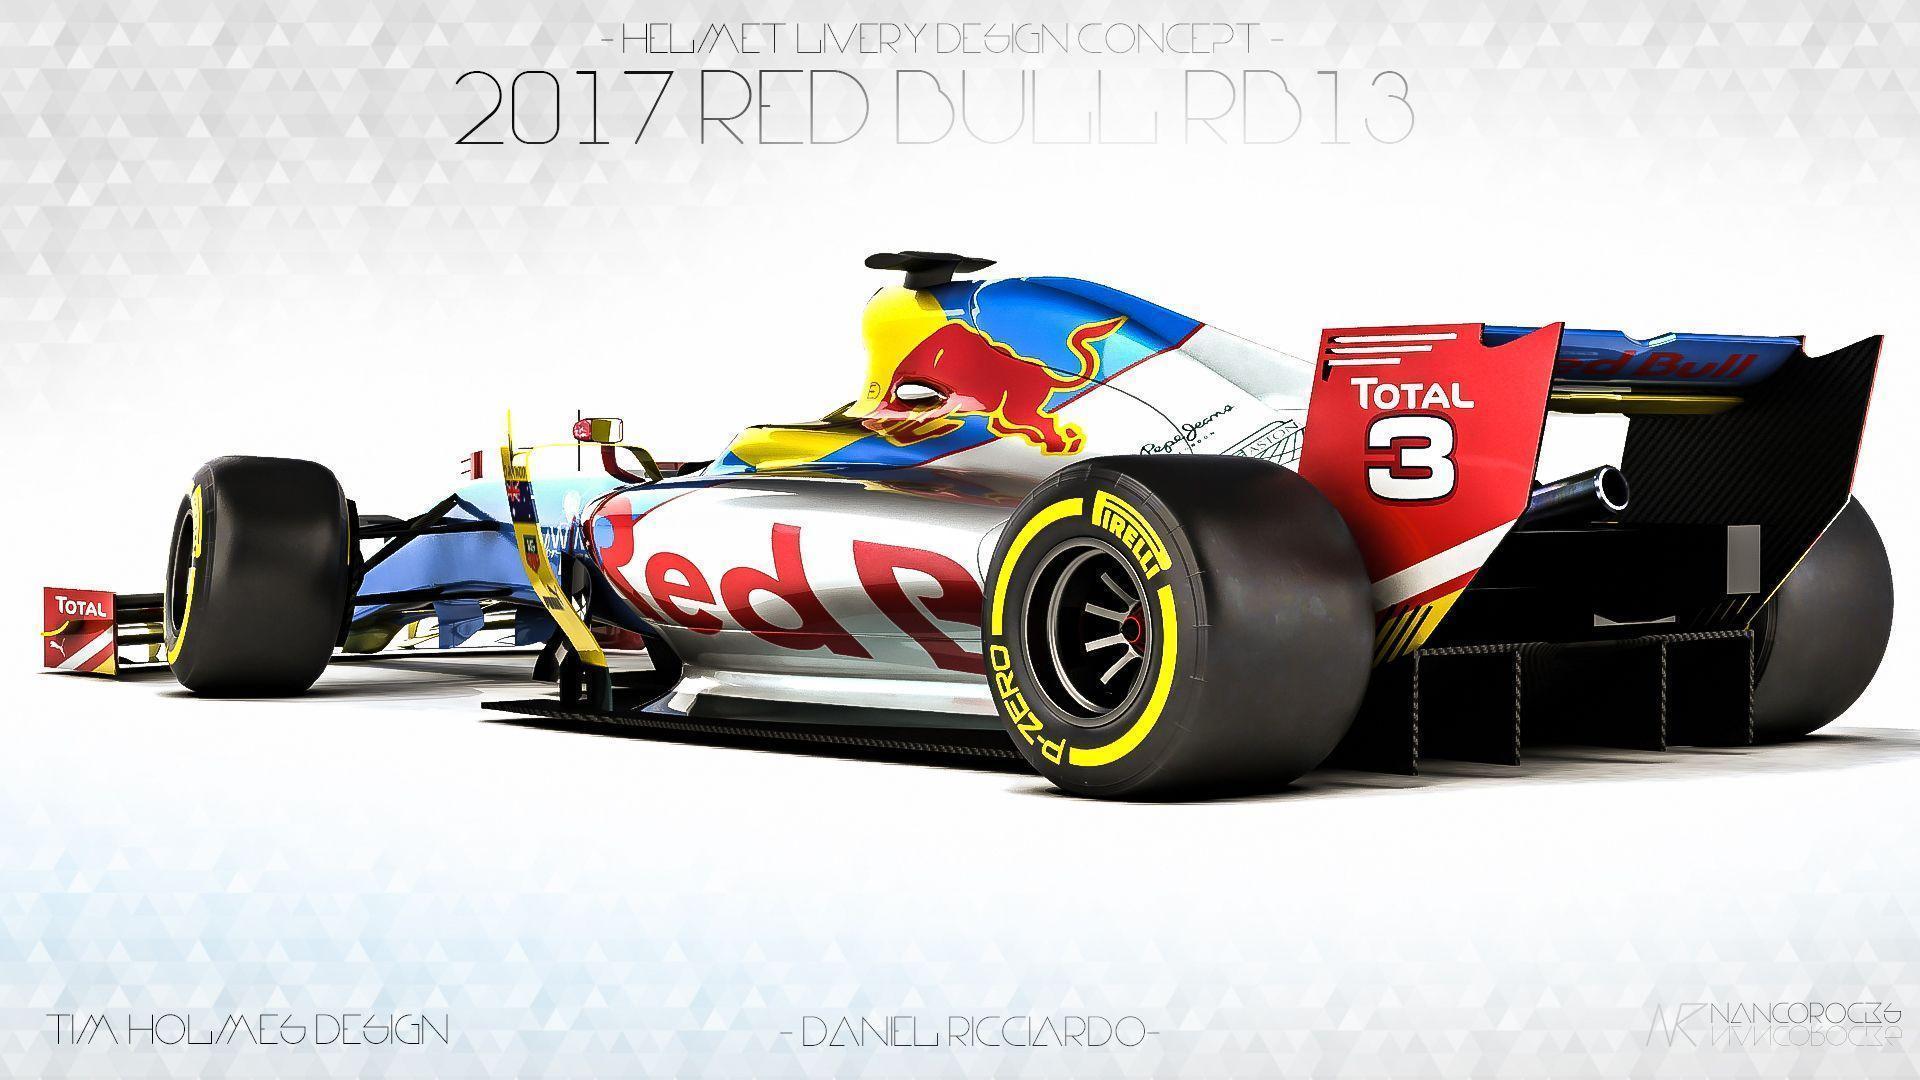 Red Bull RB13 Ricciardo